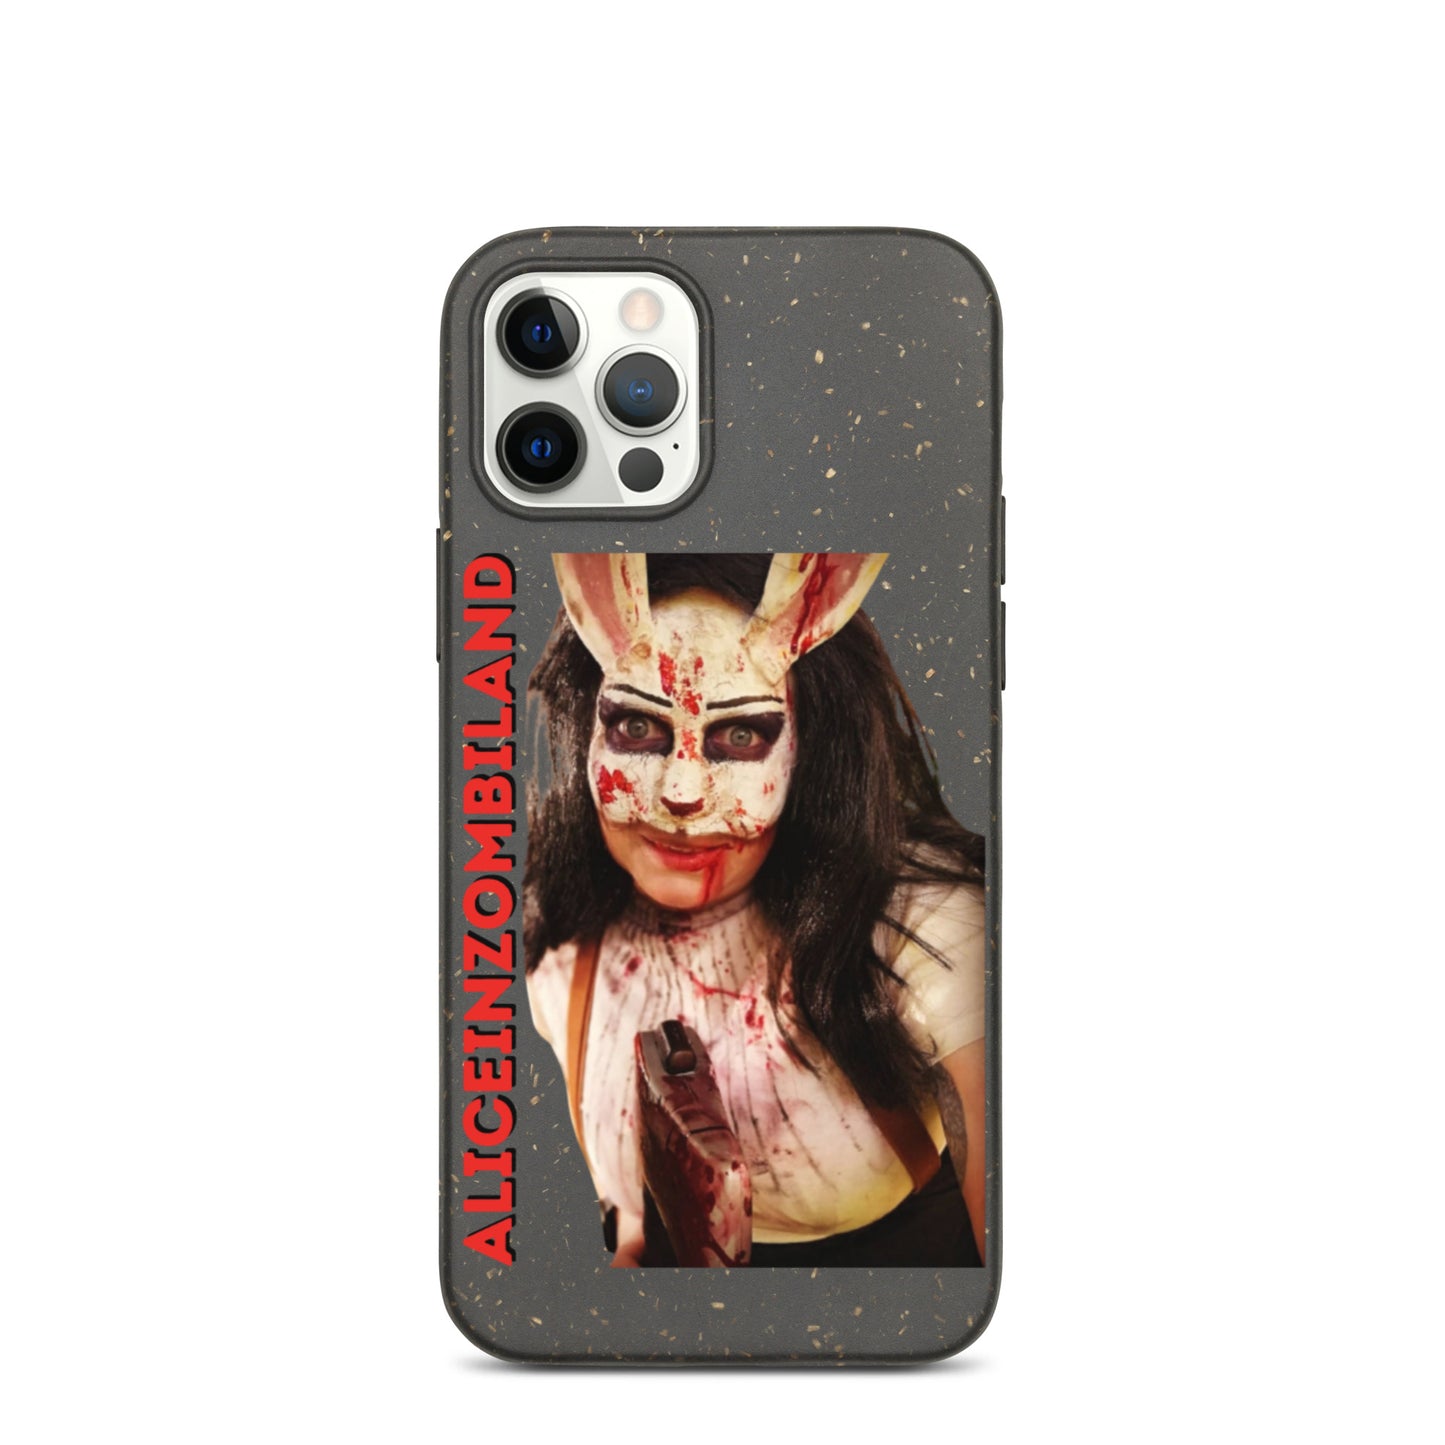 Aliceinzombiland Speckled iPhone case